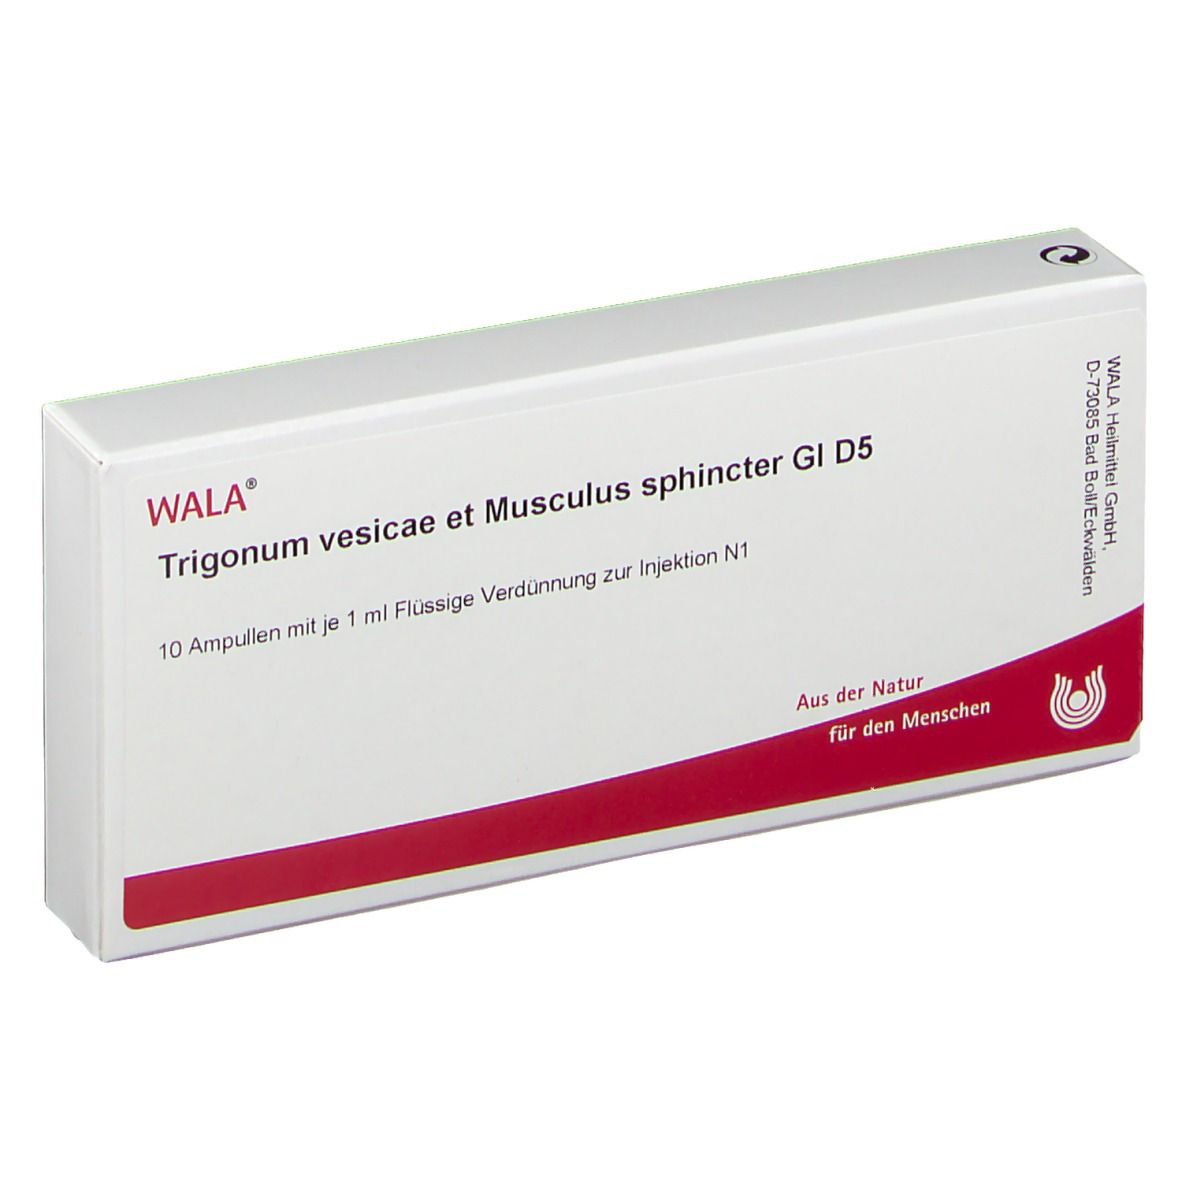 Wala® Trigonum vesicae et Musculus sphincter GL D 5